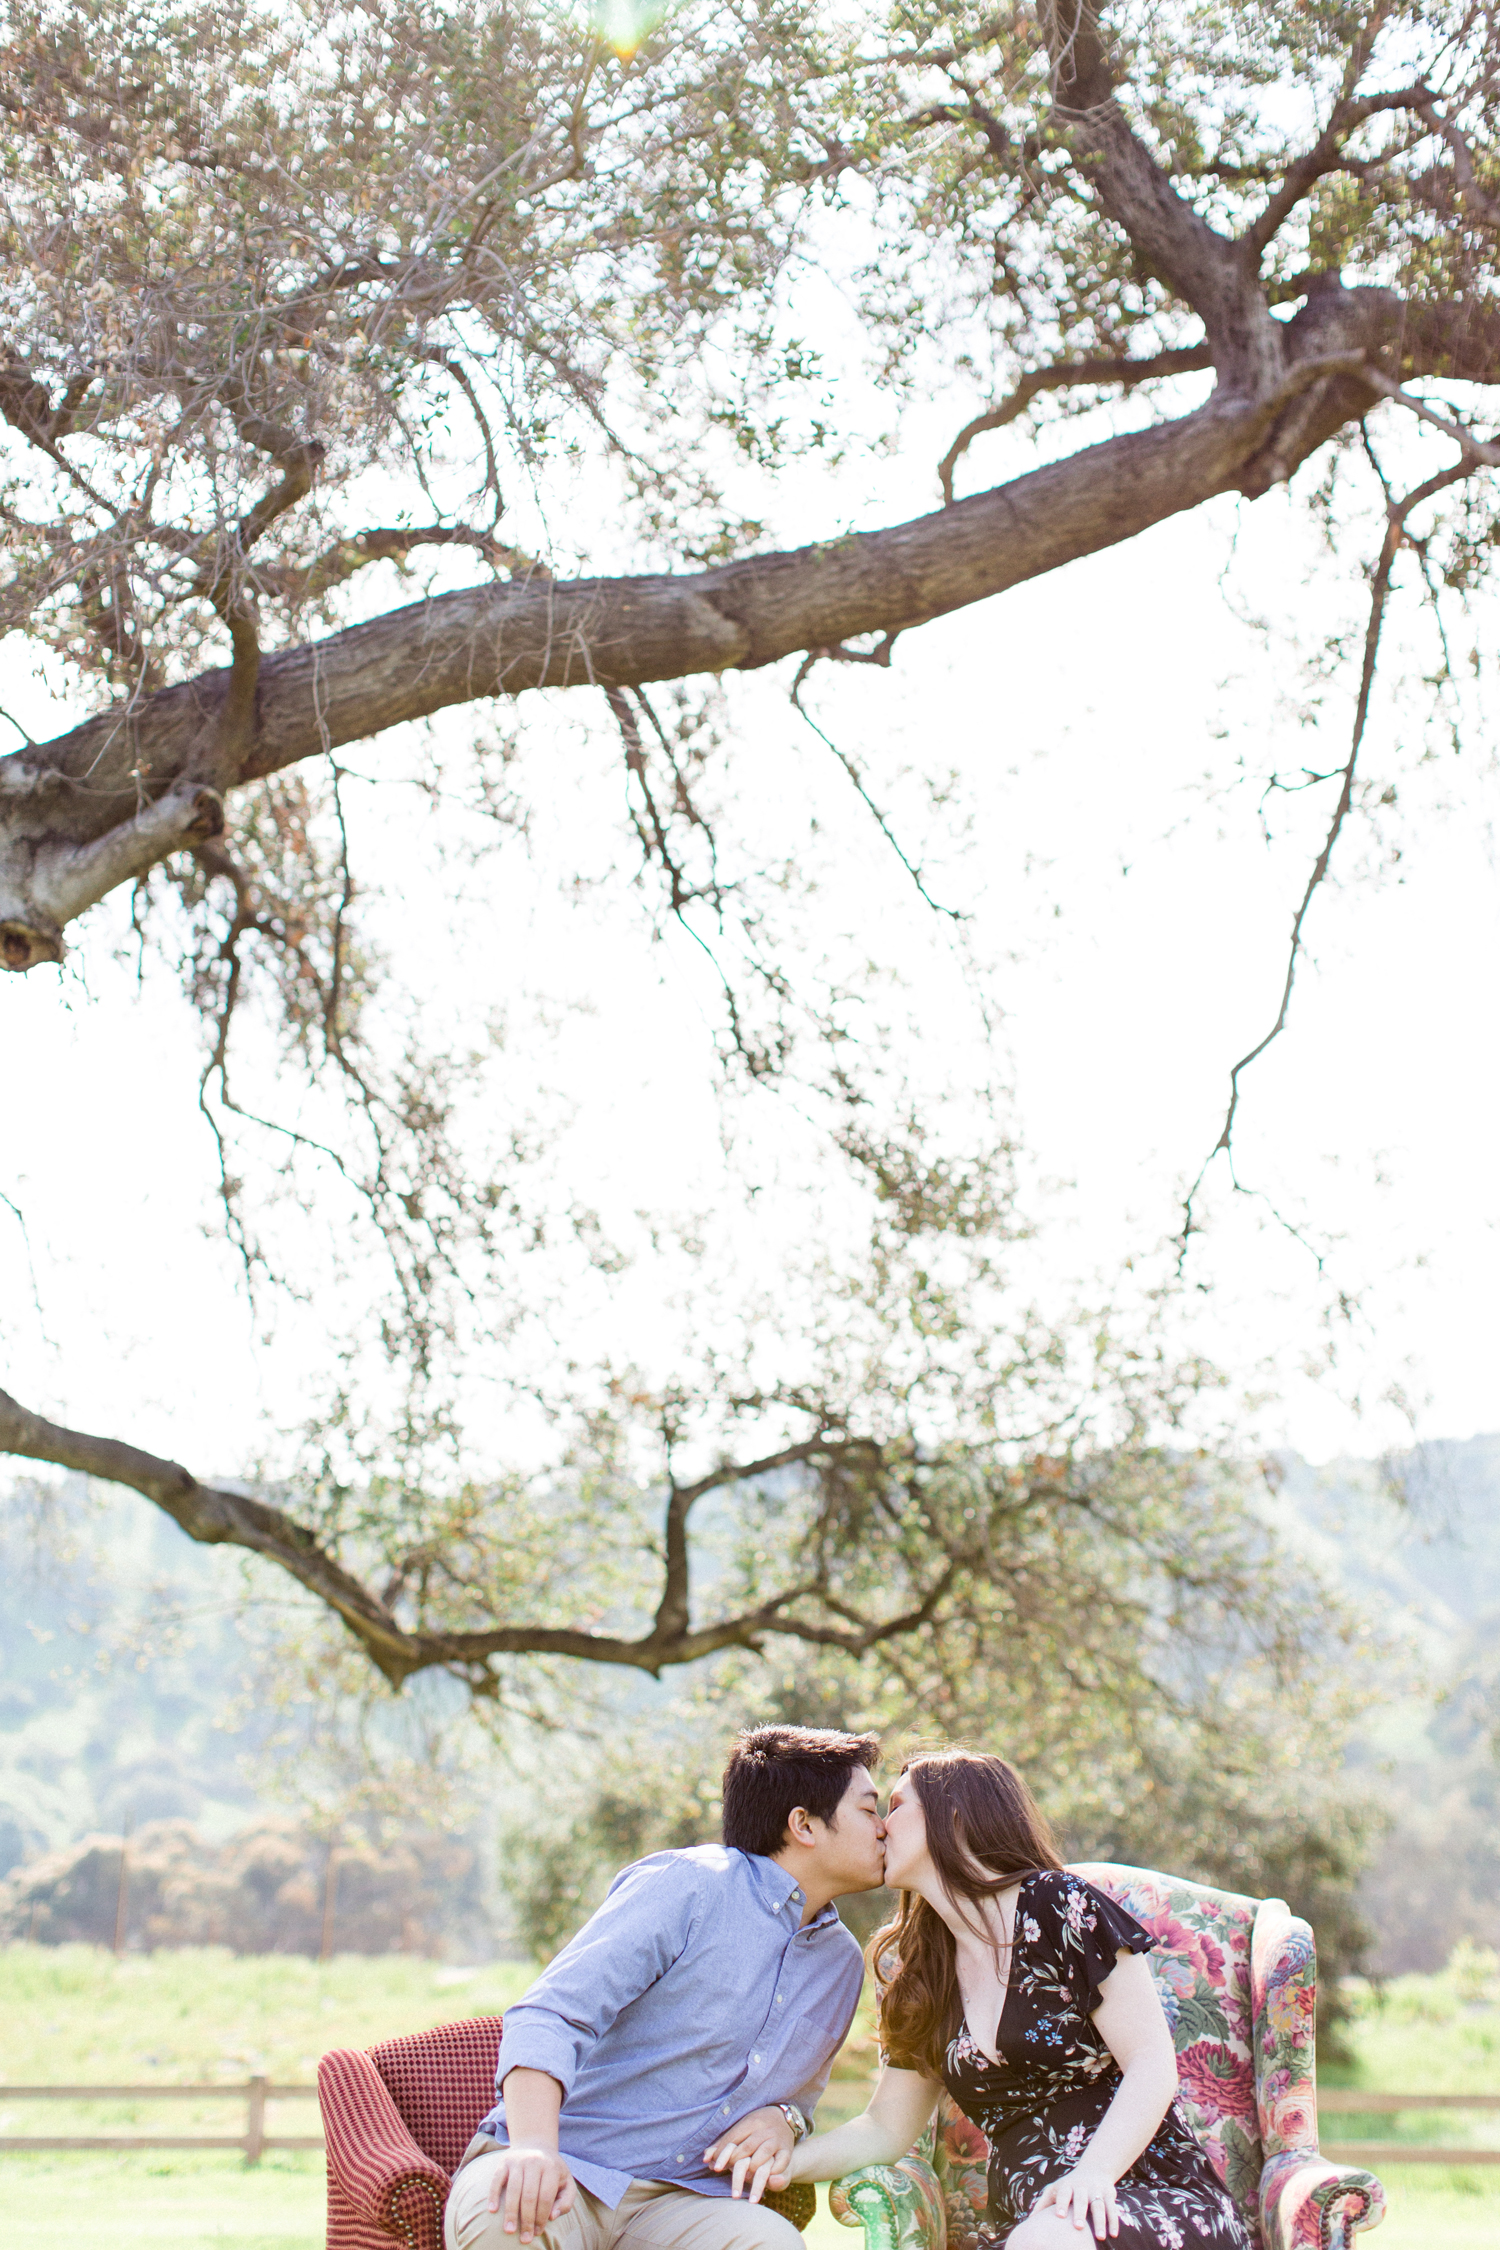 thevondys.com | Burbank Engagement | Los Angeles Wedding Photography | The Vondys Southern California Photographer